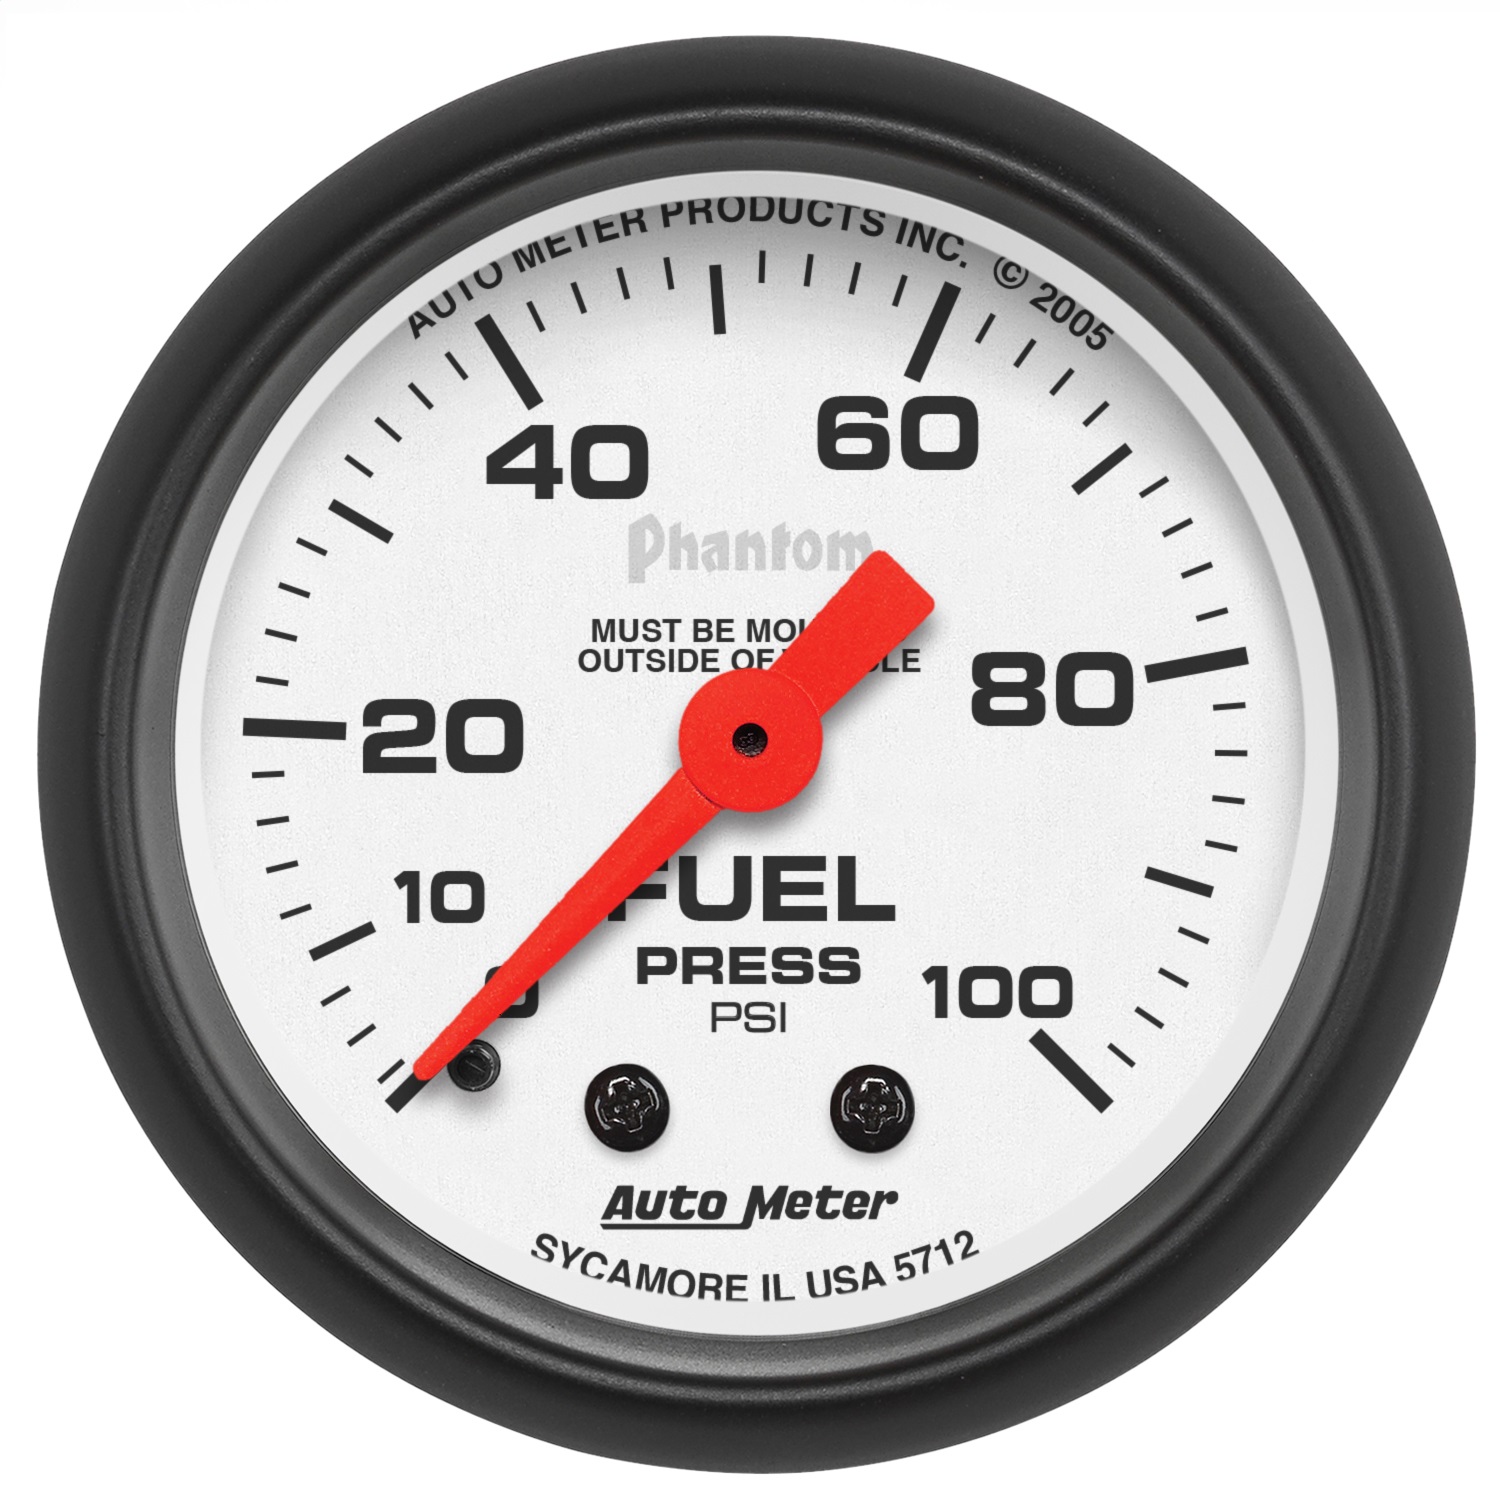 Auto Meter Auto Meter 5712 Phantom; Mechanical Fuel Pressure Gauge